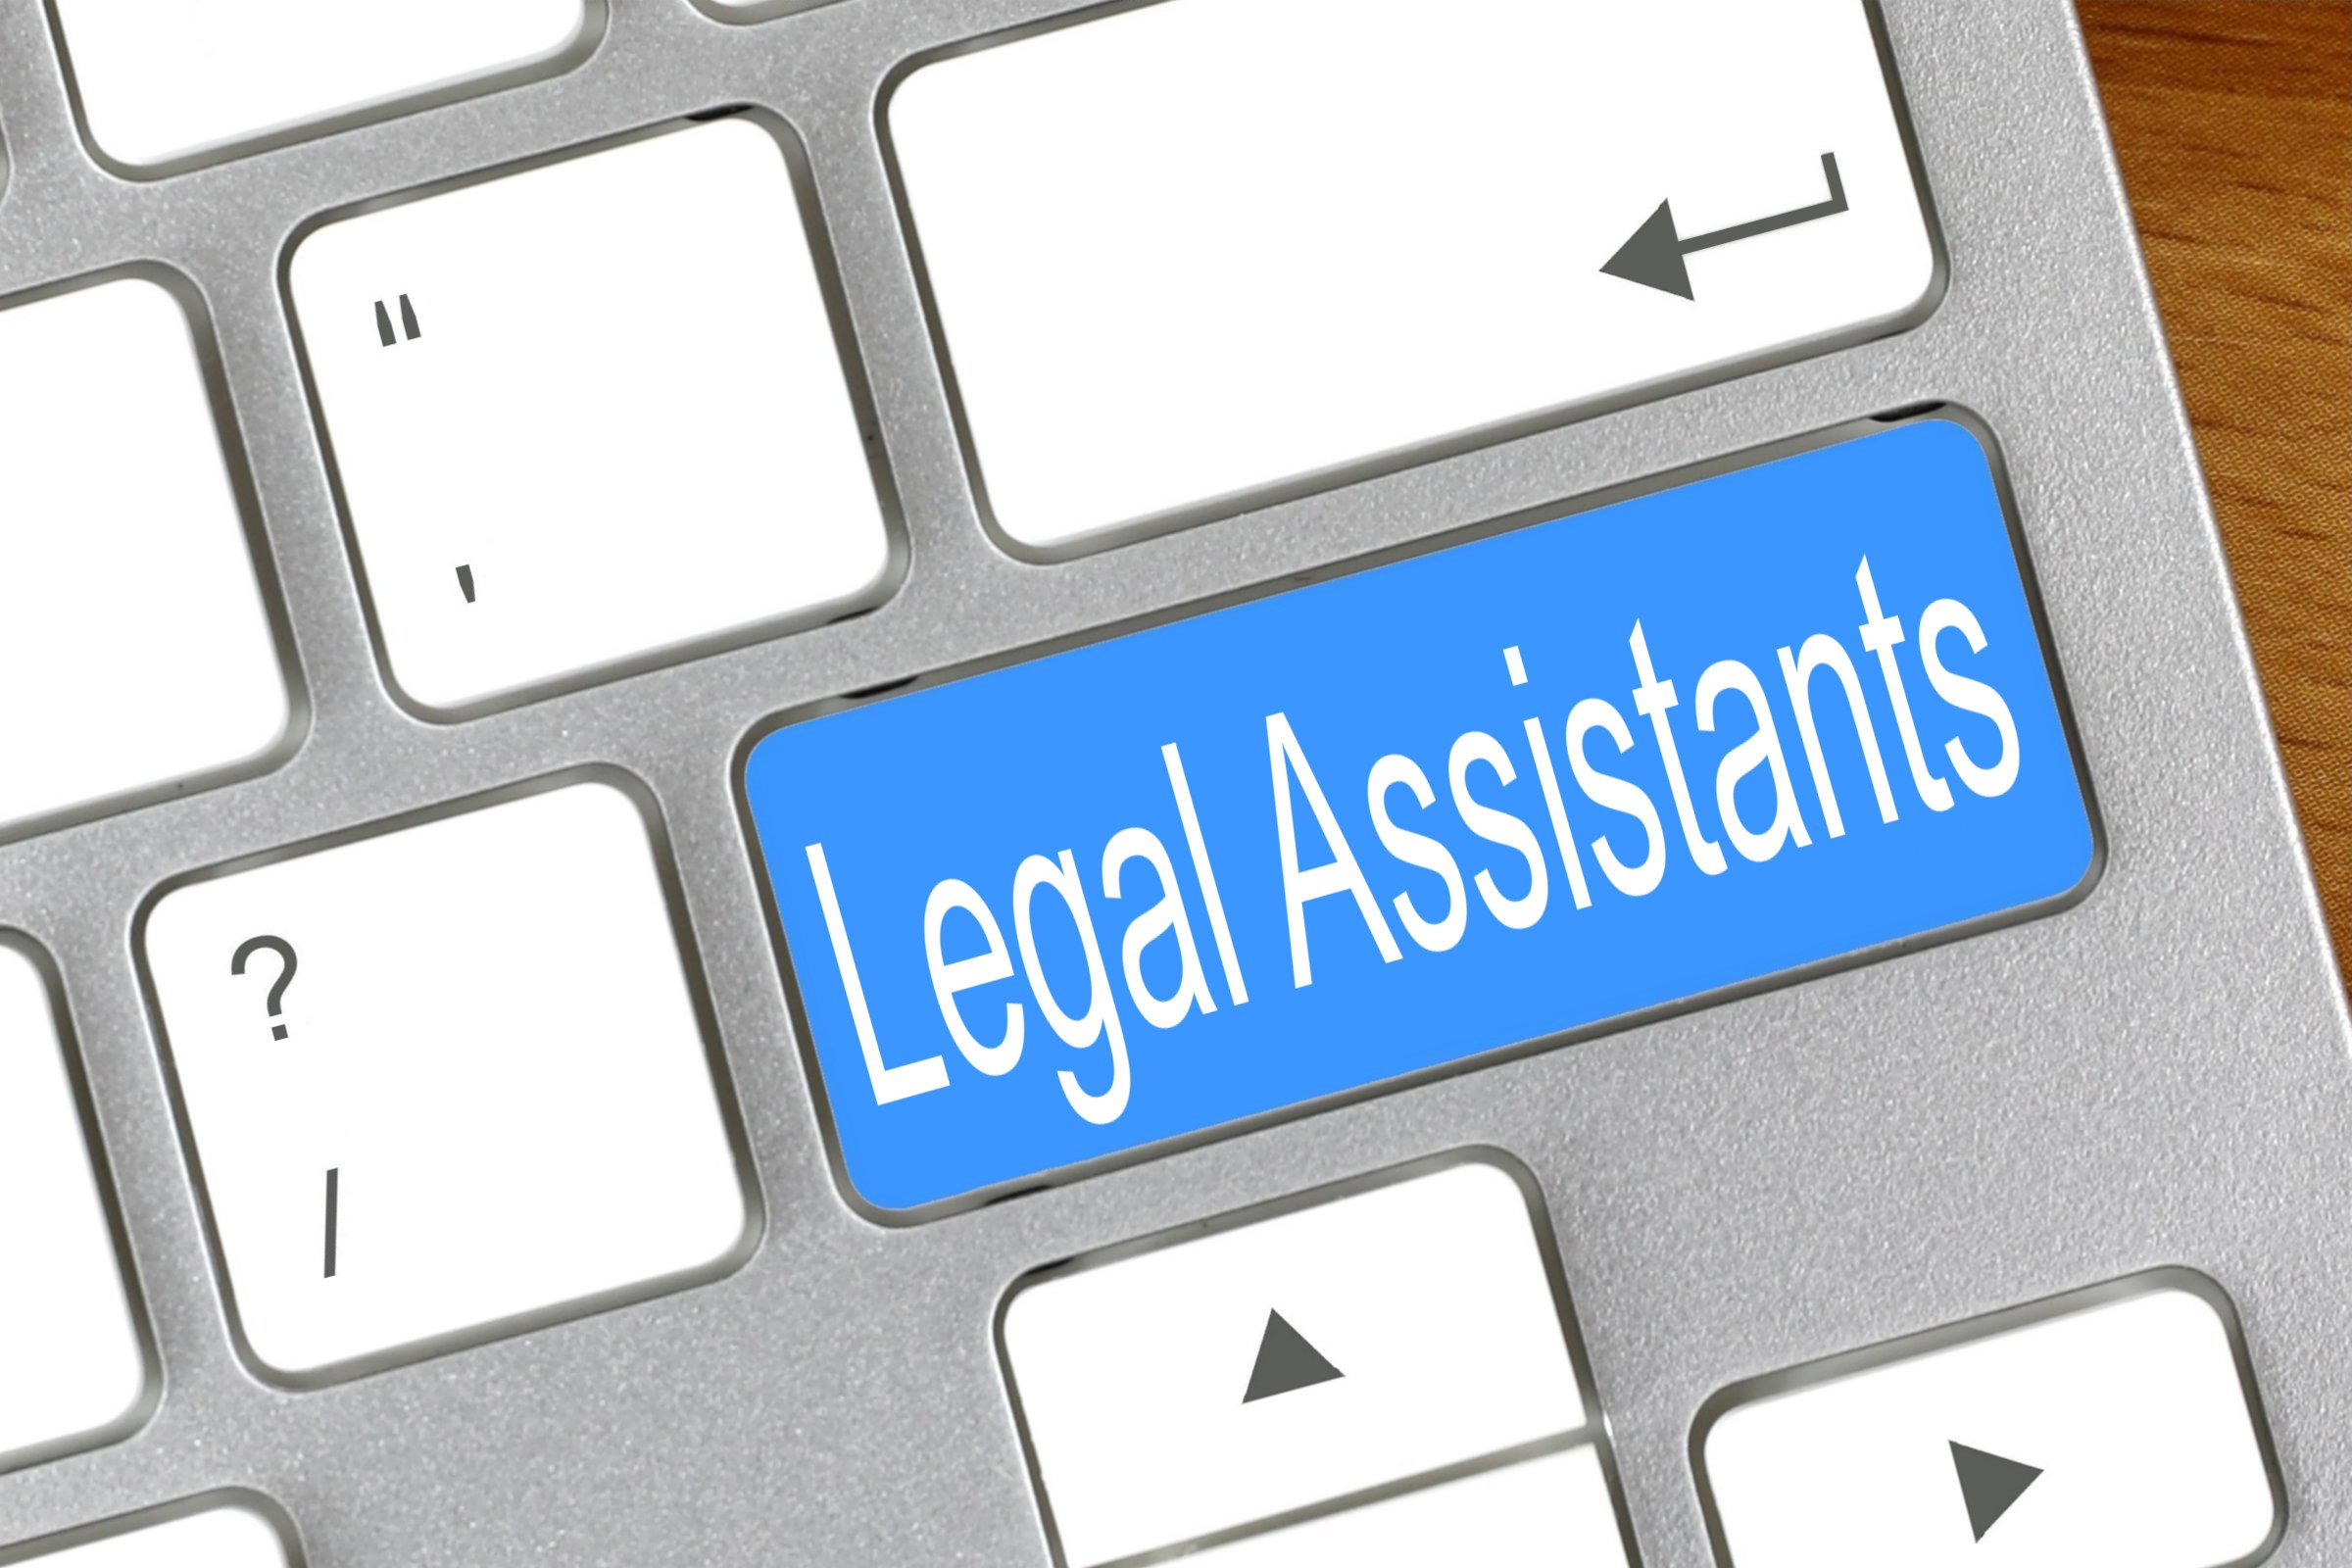 legal assistants